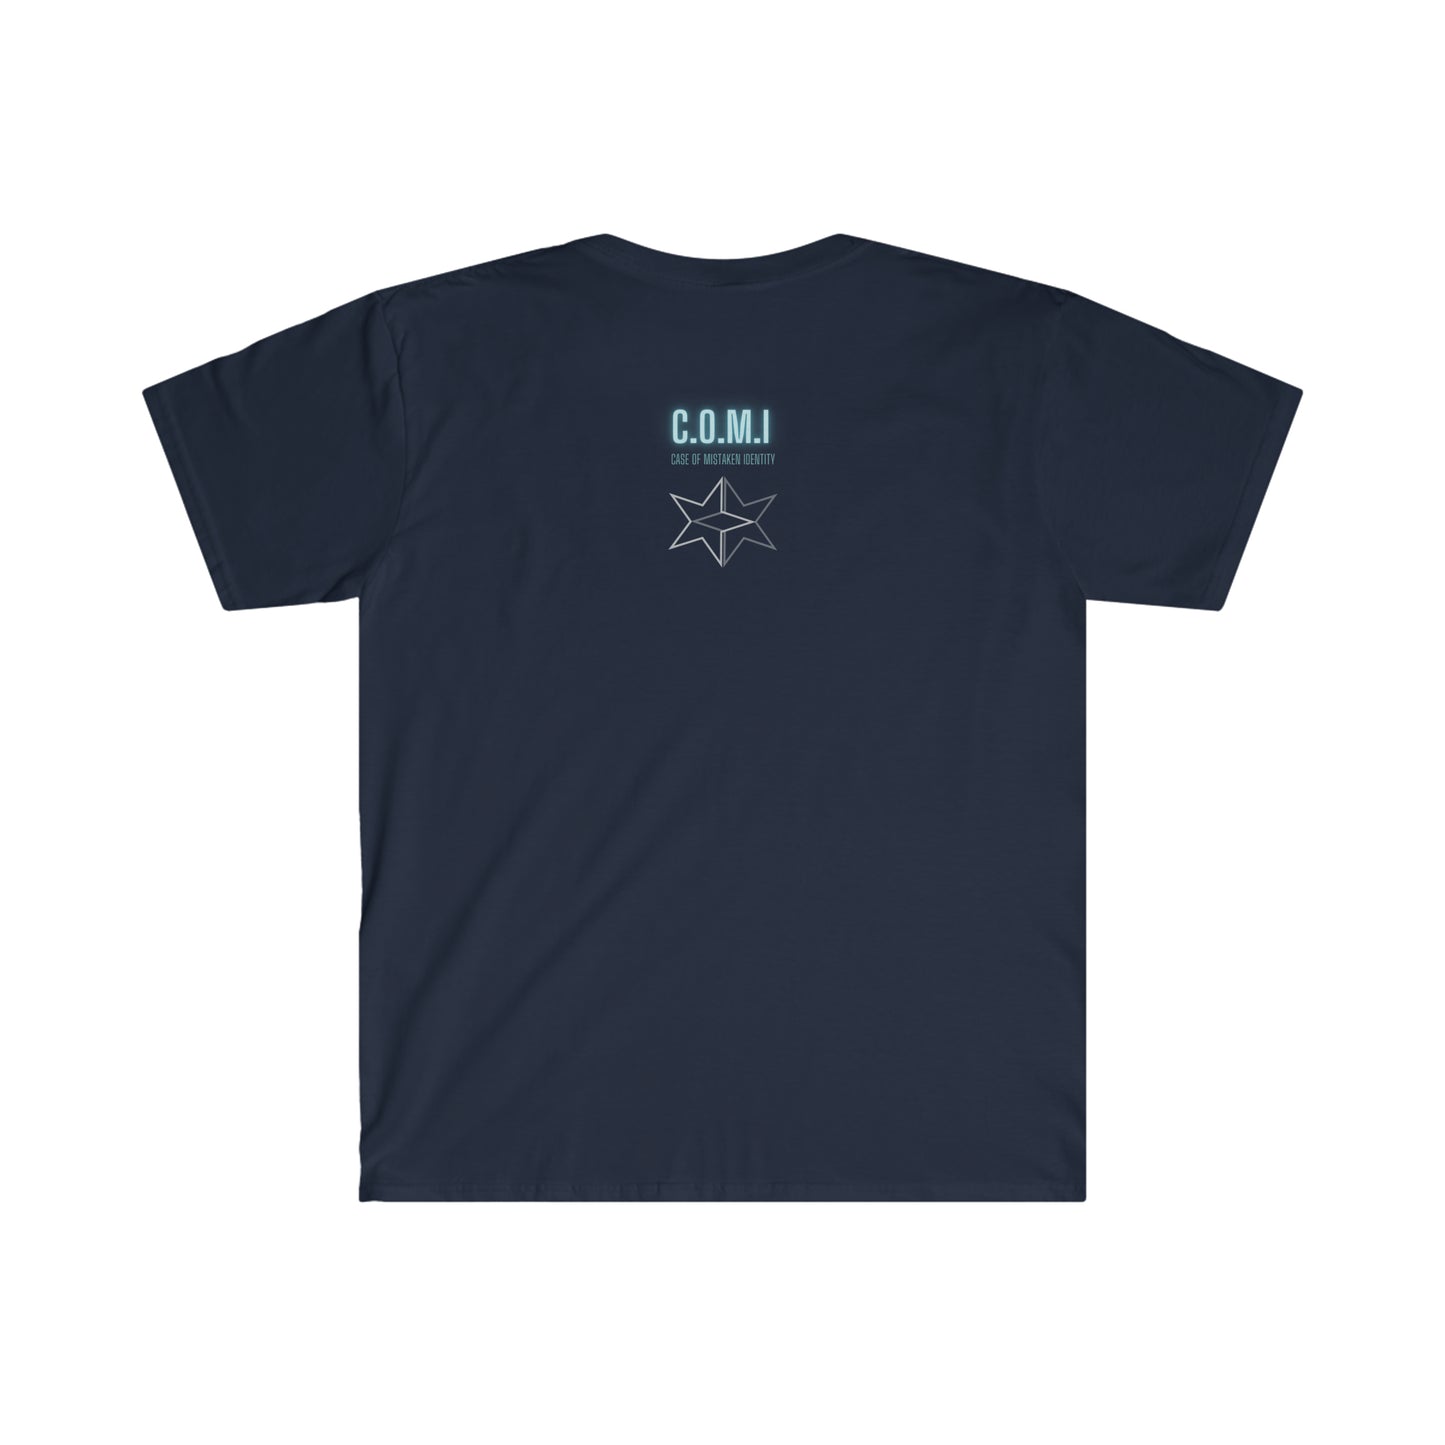 Old Skool 911 - Unisex Softstyle T-Shirt